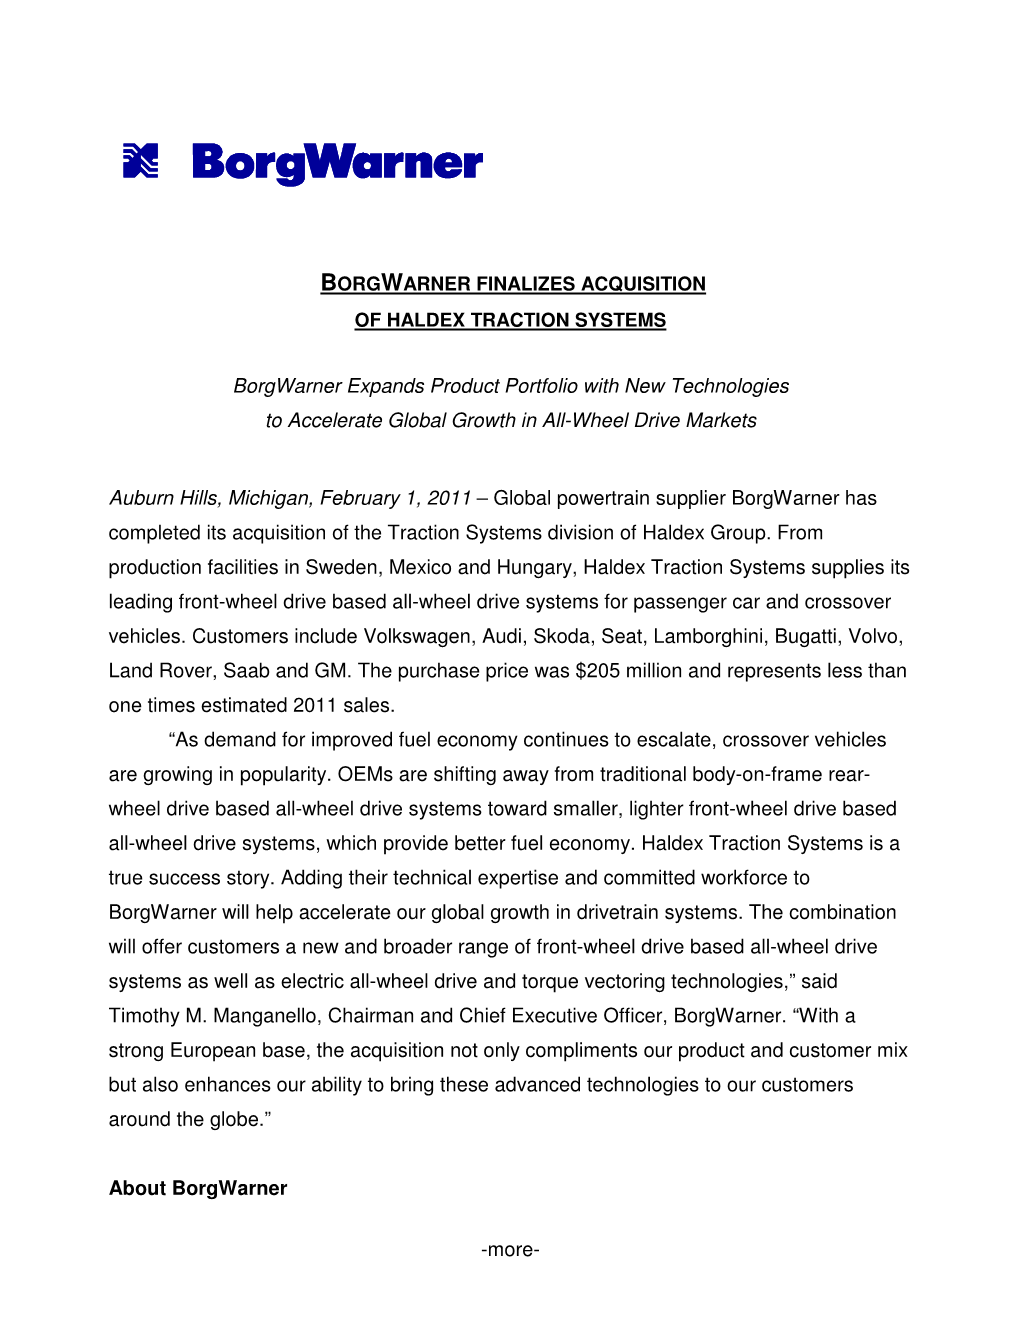 Borgwarner Finalizes Acquisition of Haldex Traction Systems) – 2